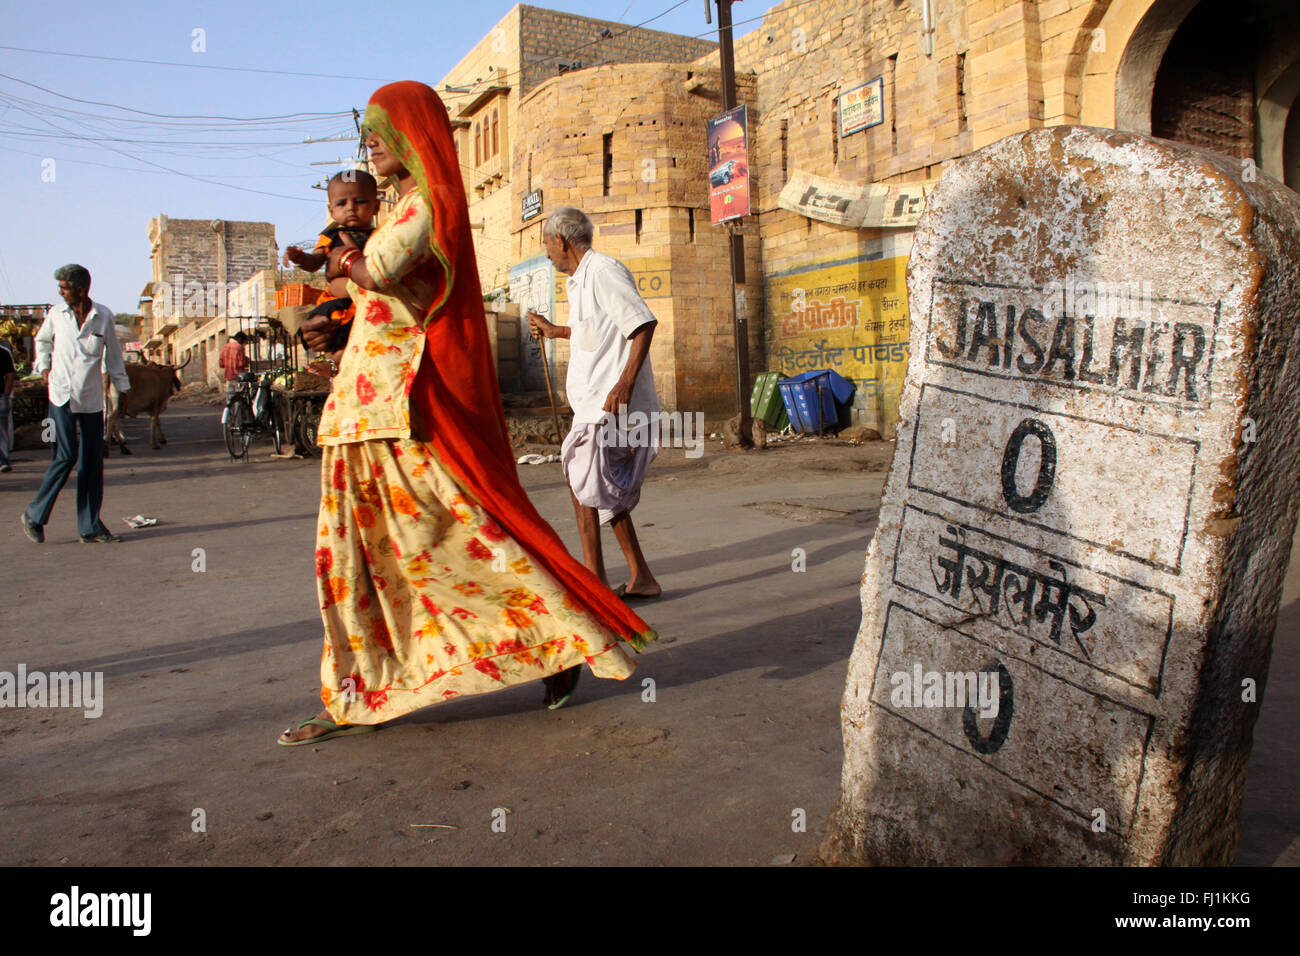 People in a street of Jaisalmer, India Stock Photo